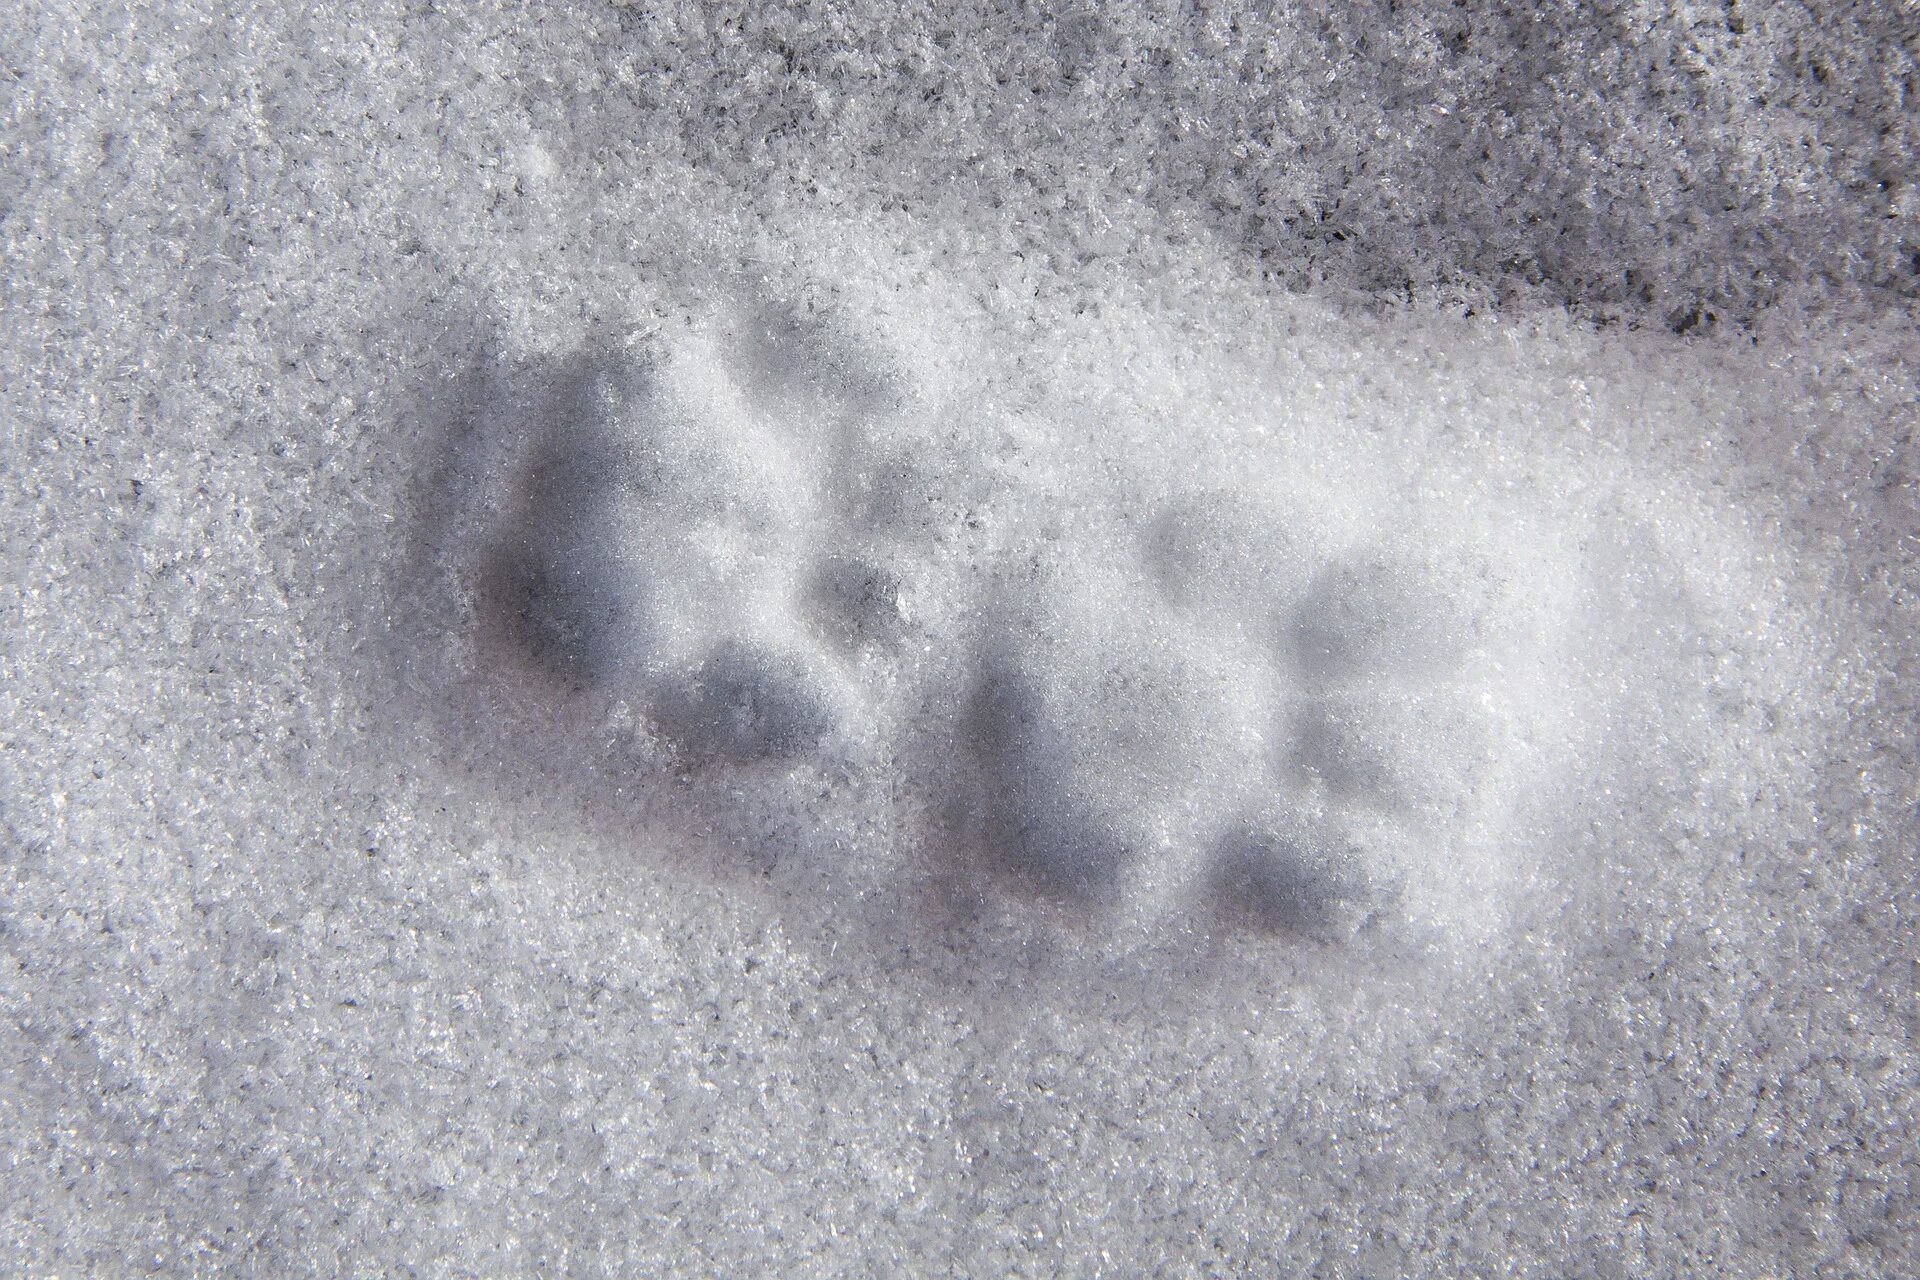 Следы кота на снегу. Кошачьи лапы на снегу. След кошачьей лапы на снегу. Следы кошачьих лапок на снегу. Лапка на снегу